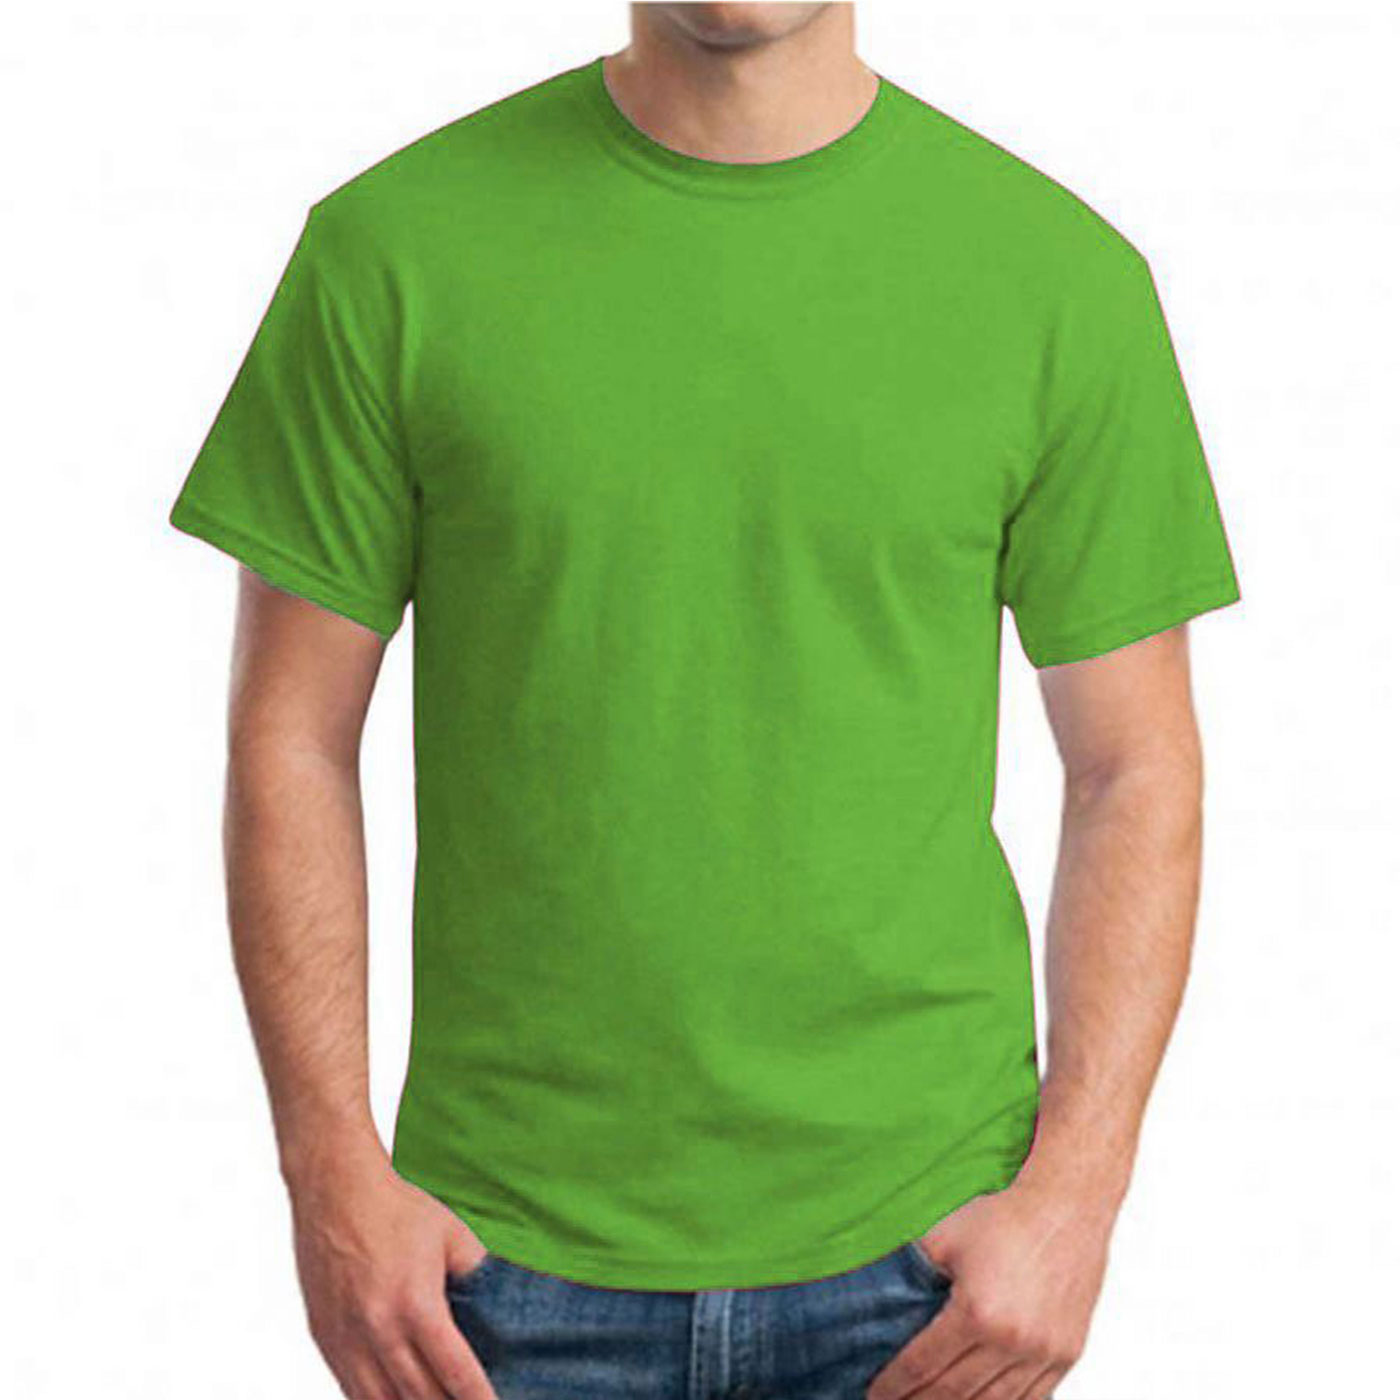 Unisex Promosyon T-Shirt